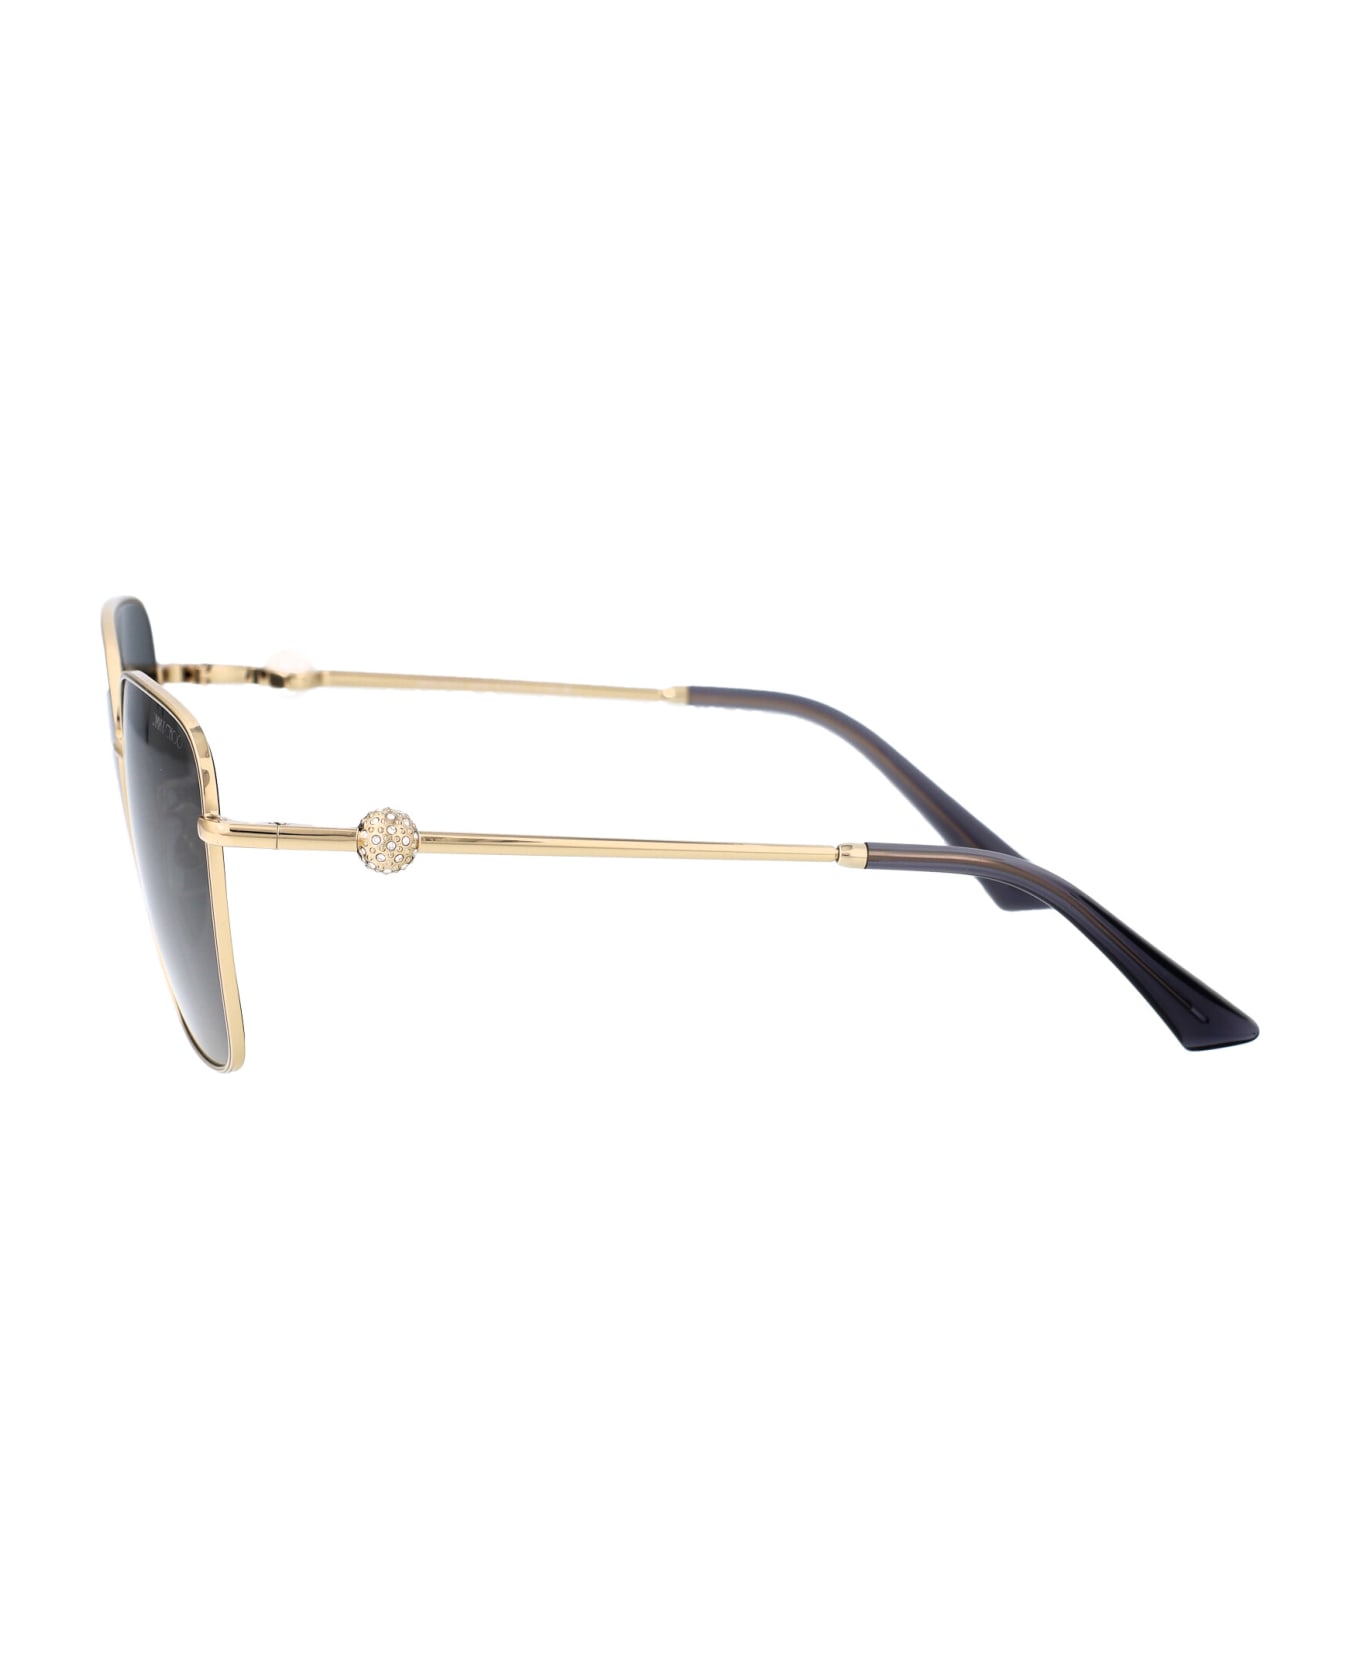 Jimmy Choo Eyewear 0jc4001b Sunglasses - 300673 Pale Gold